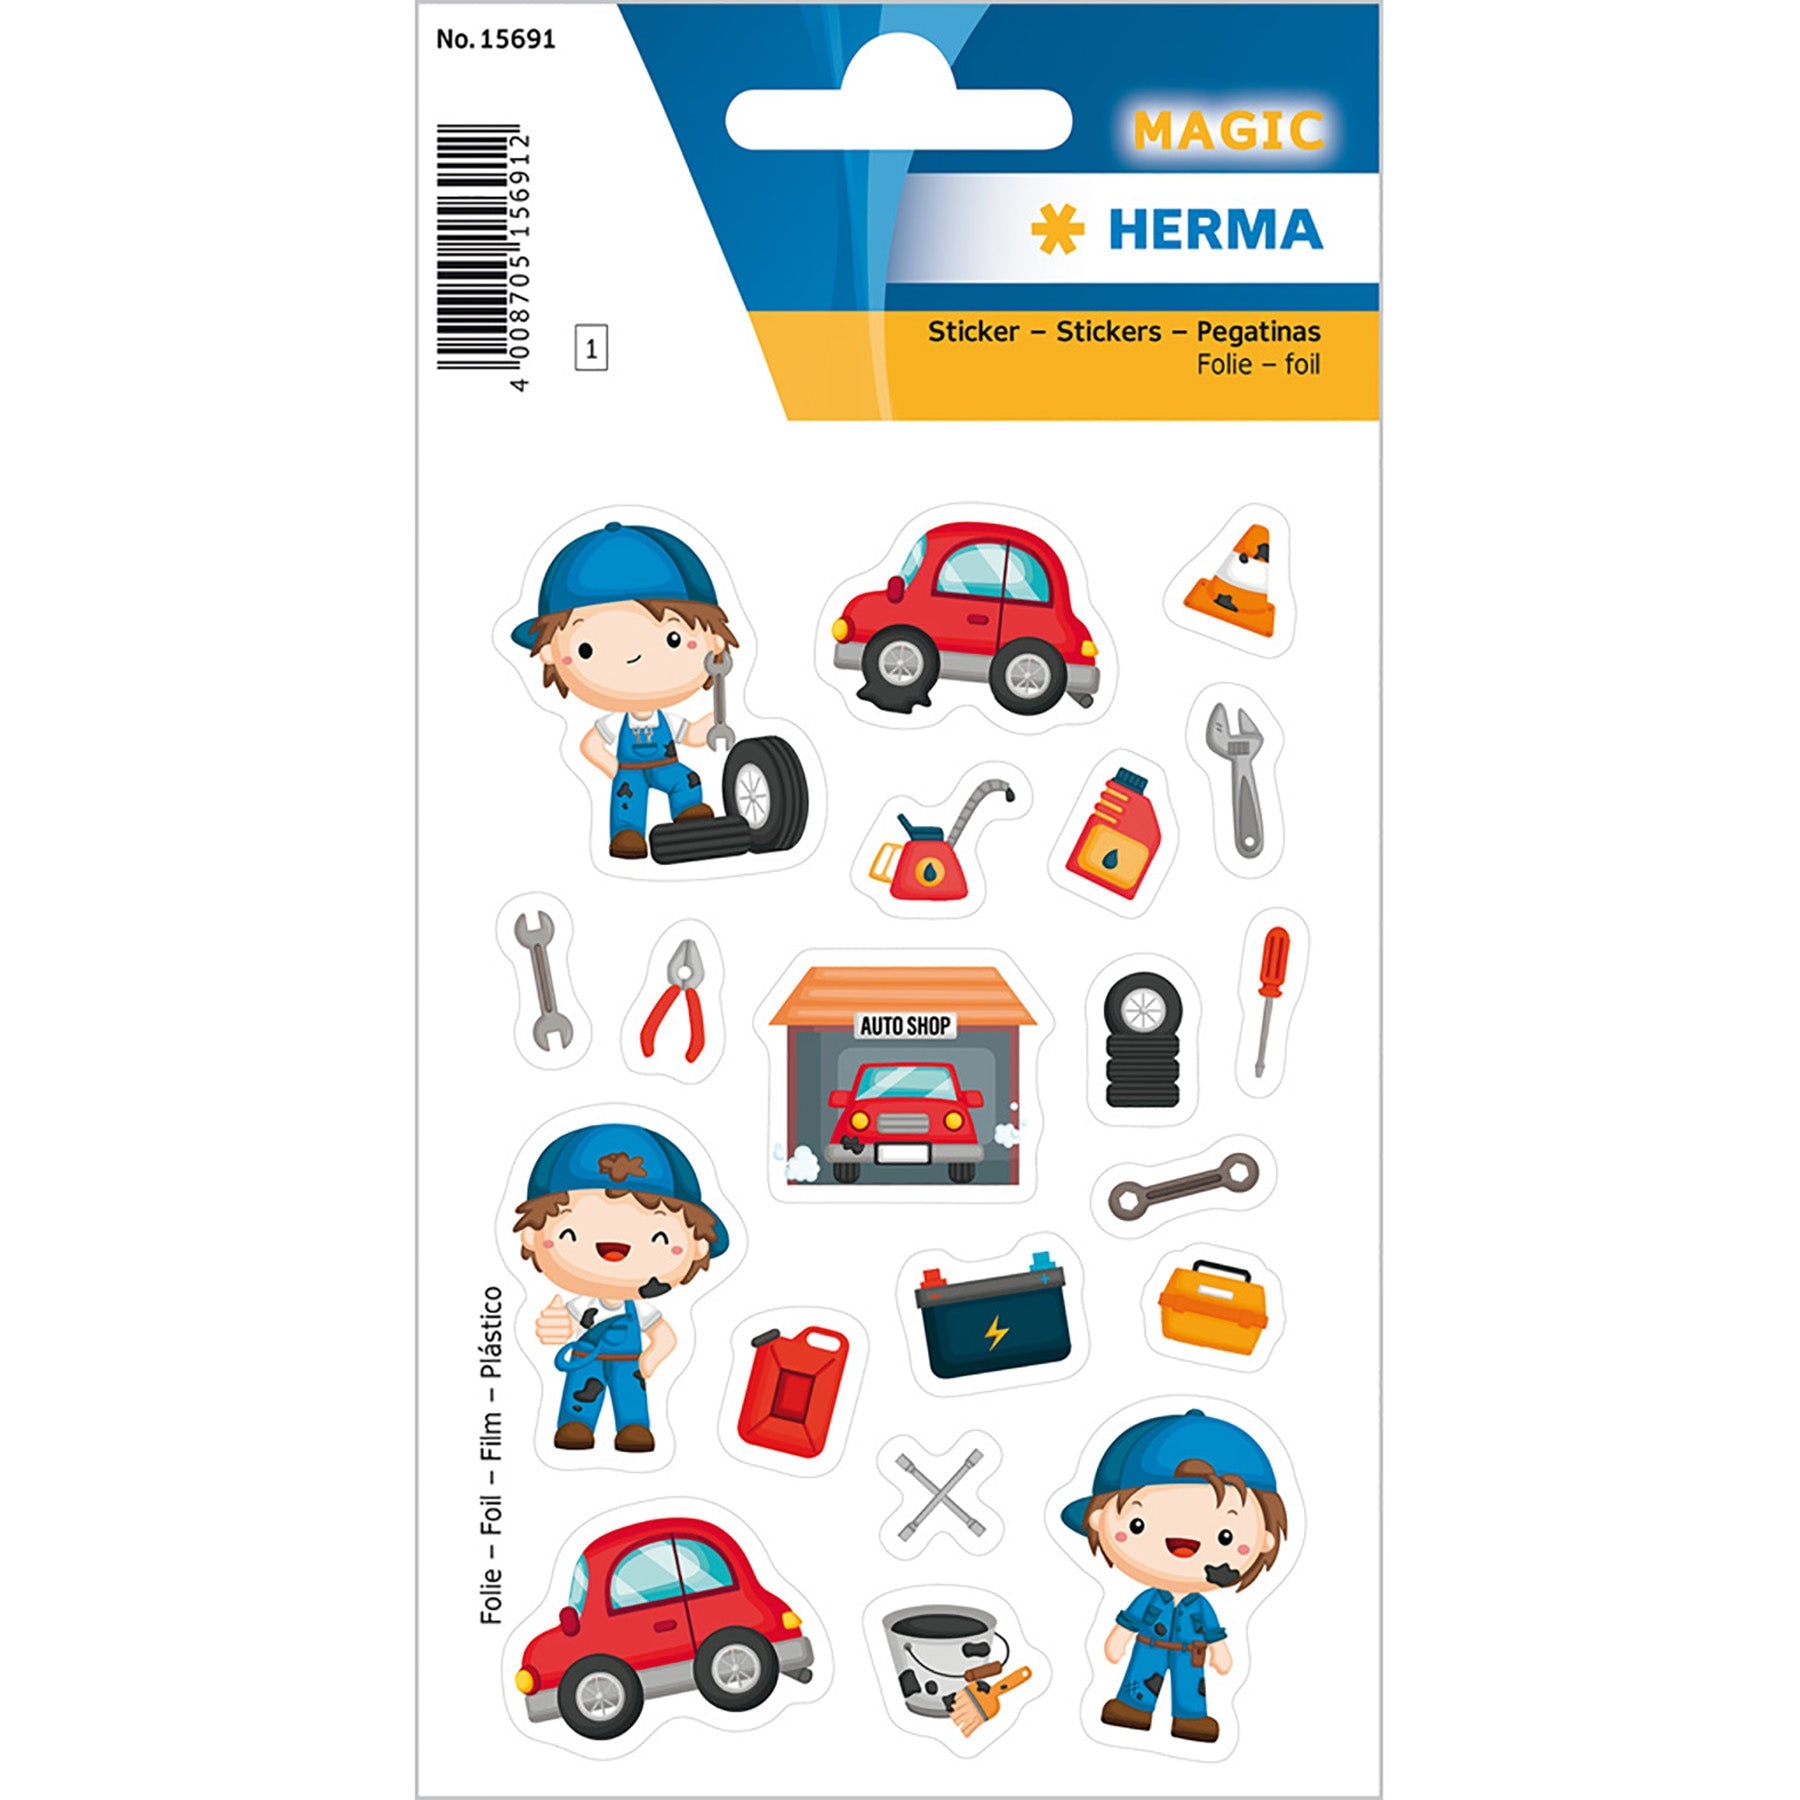 Herma Magic Stickers Little Mechanic Foil 4.75x3.1in Sheet